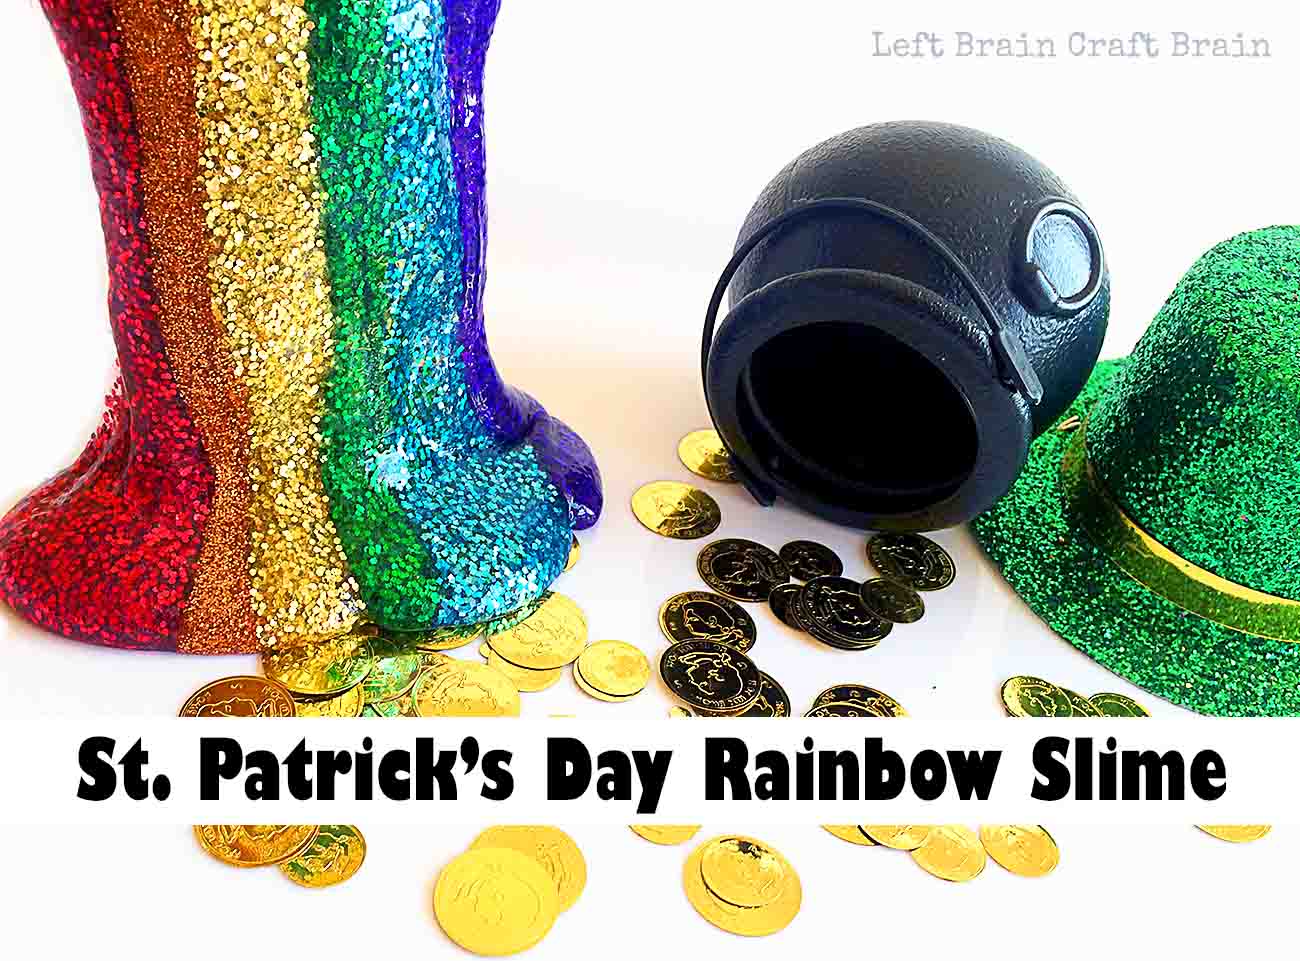 St. Patrick’s Day Rainbow Slime - Left Brain Craft Brain